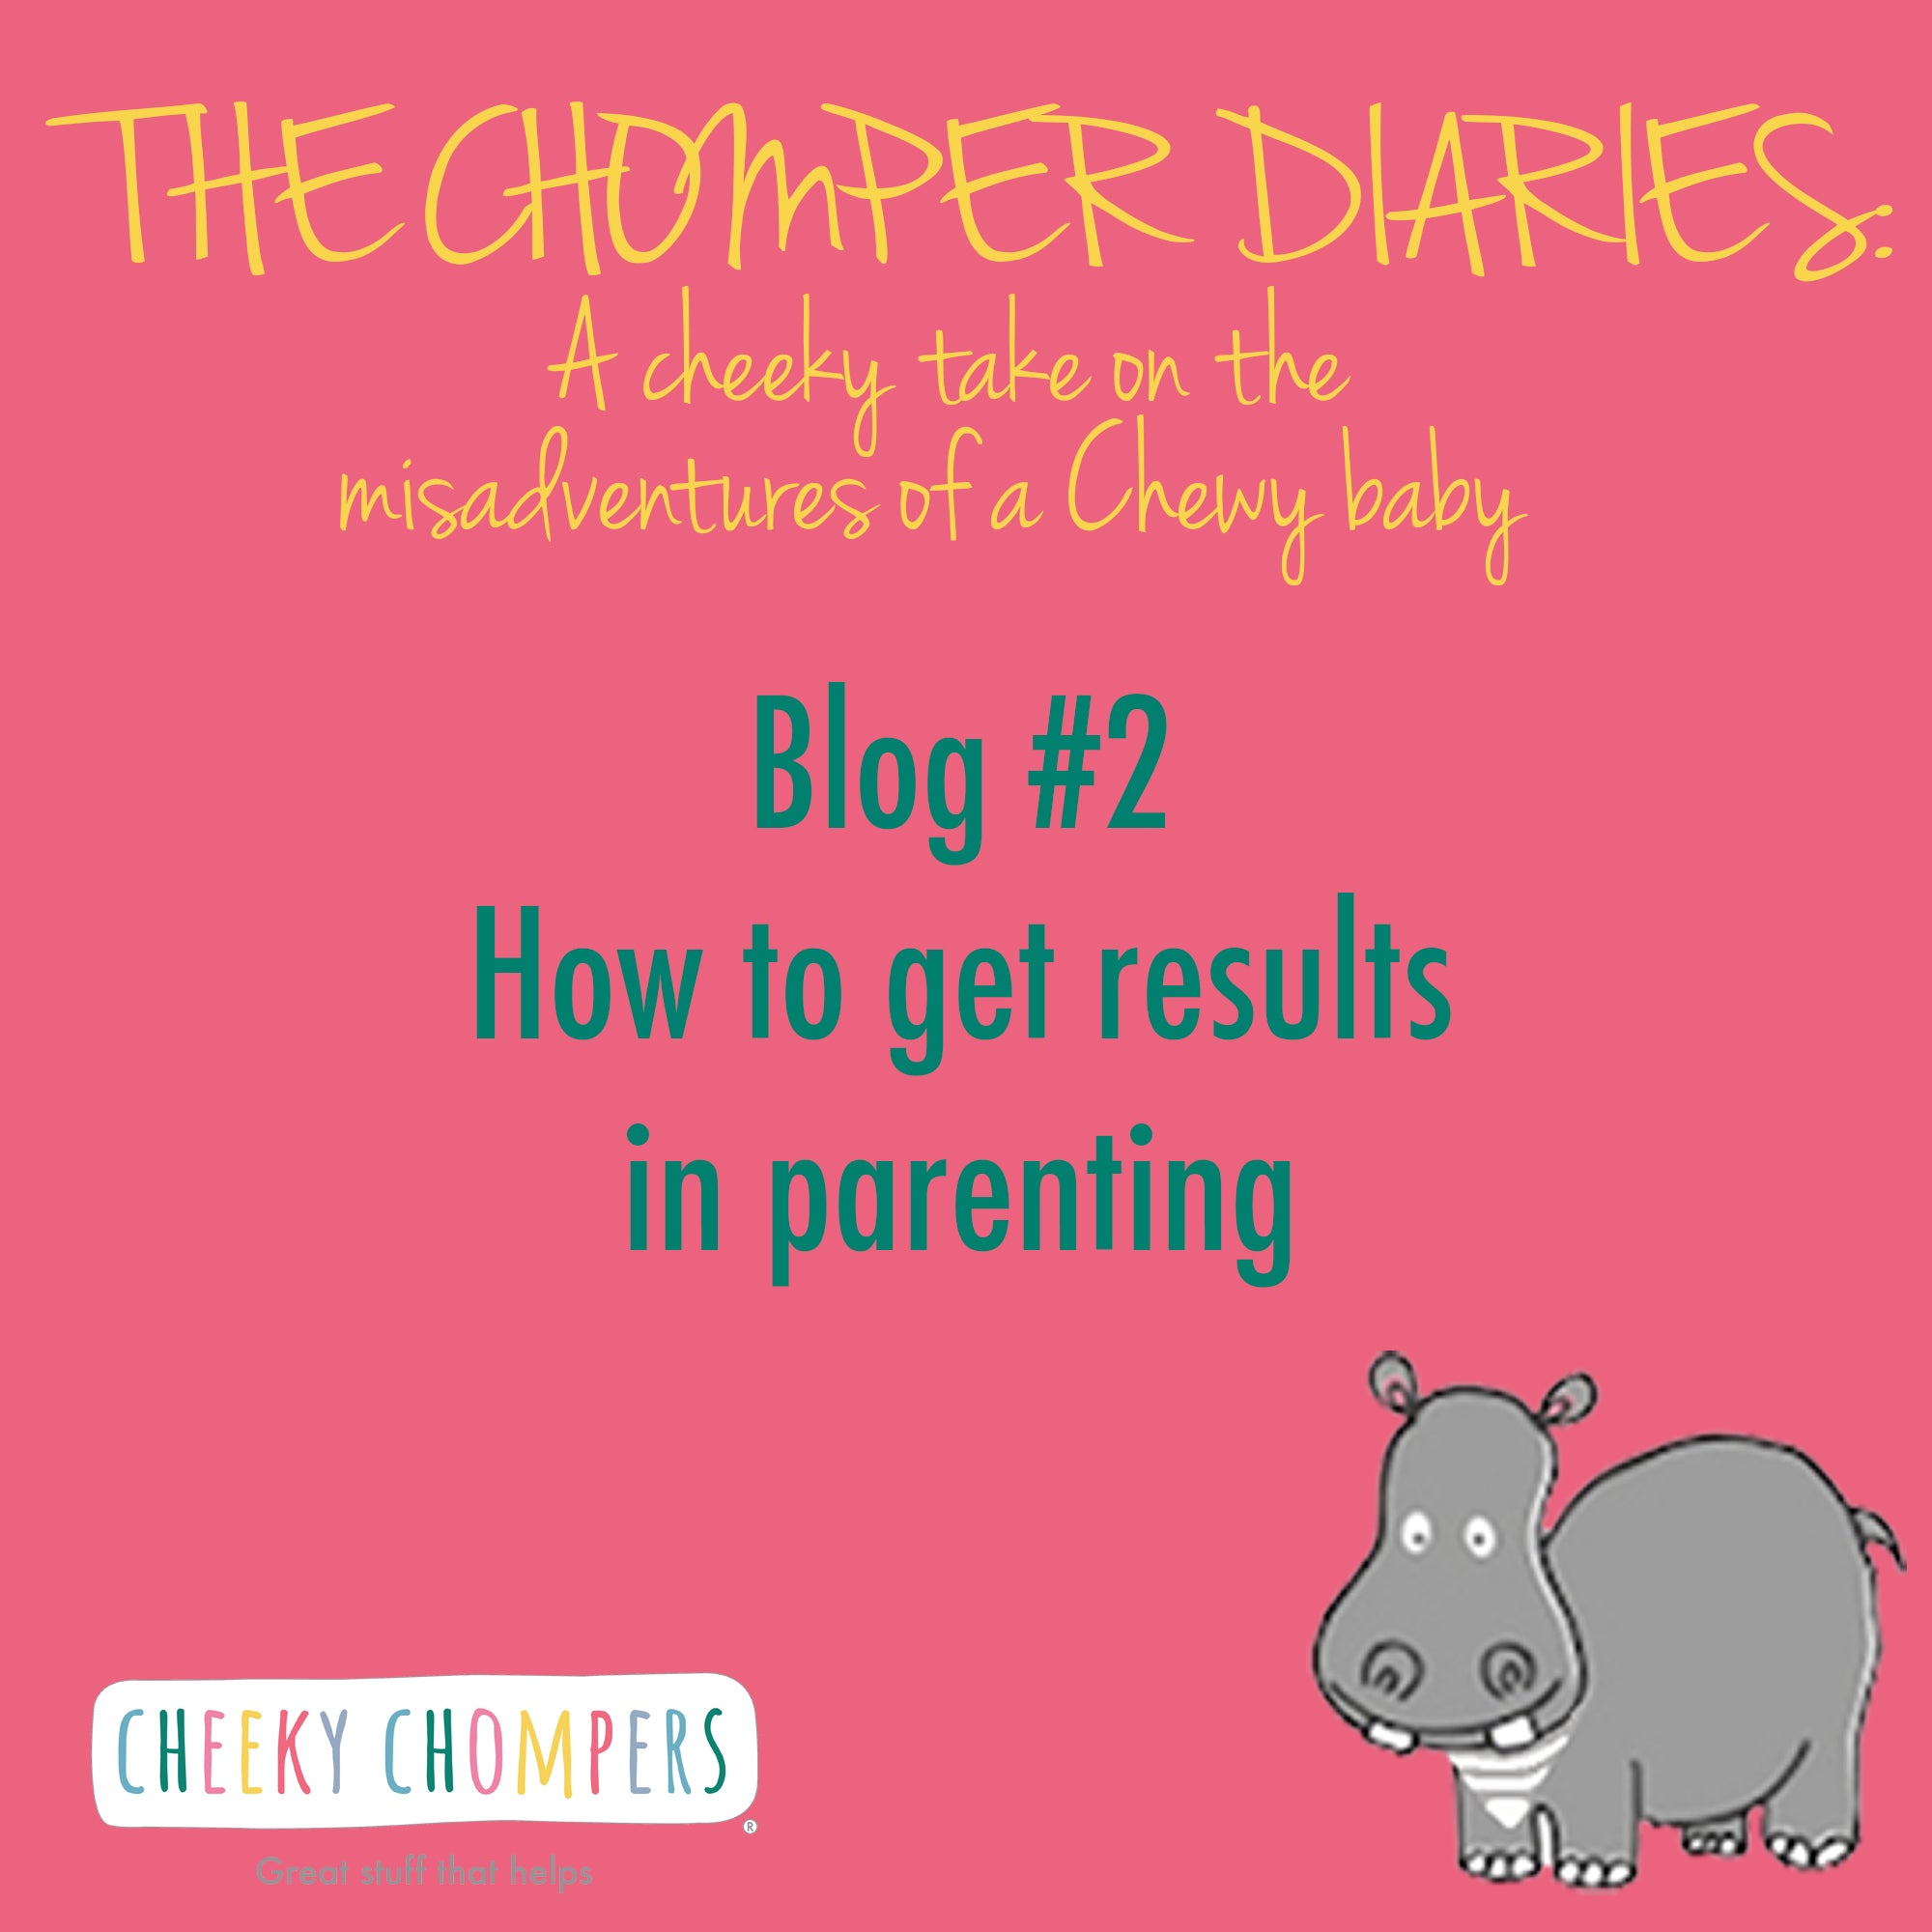 The Chomper Diaries #2